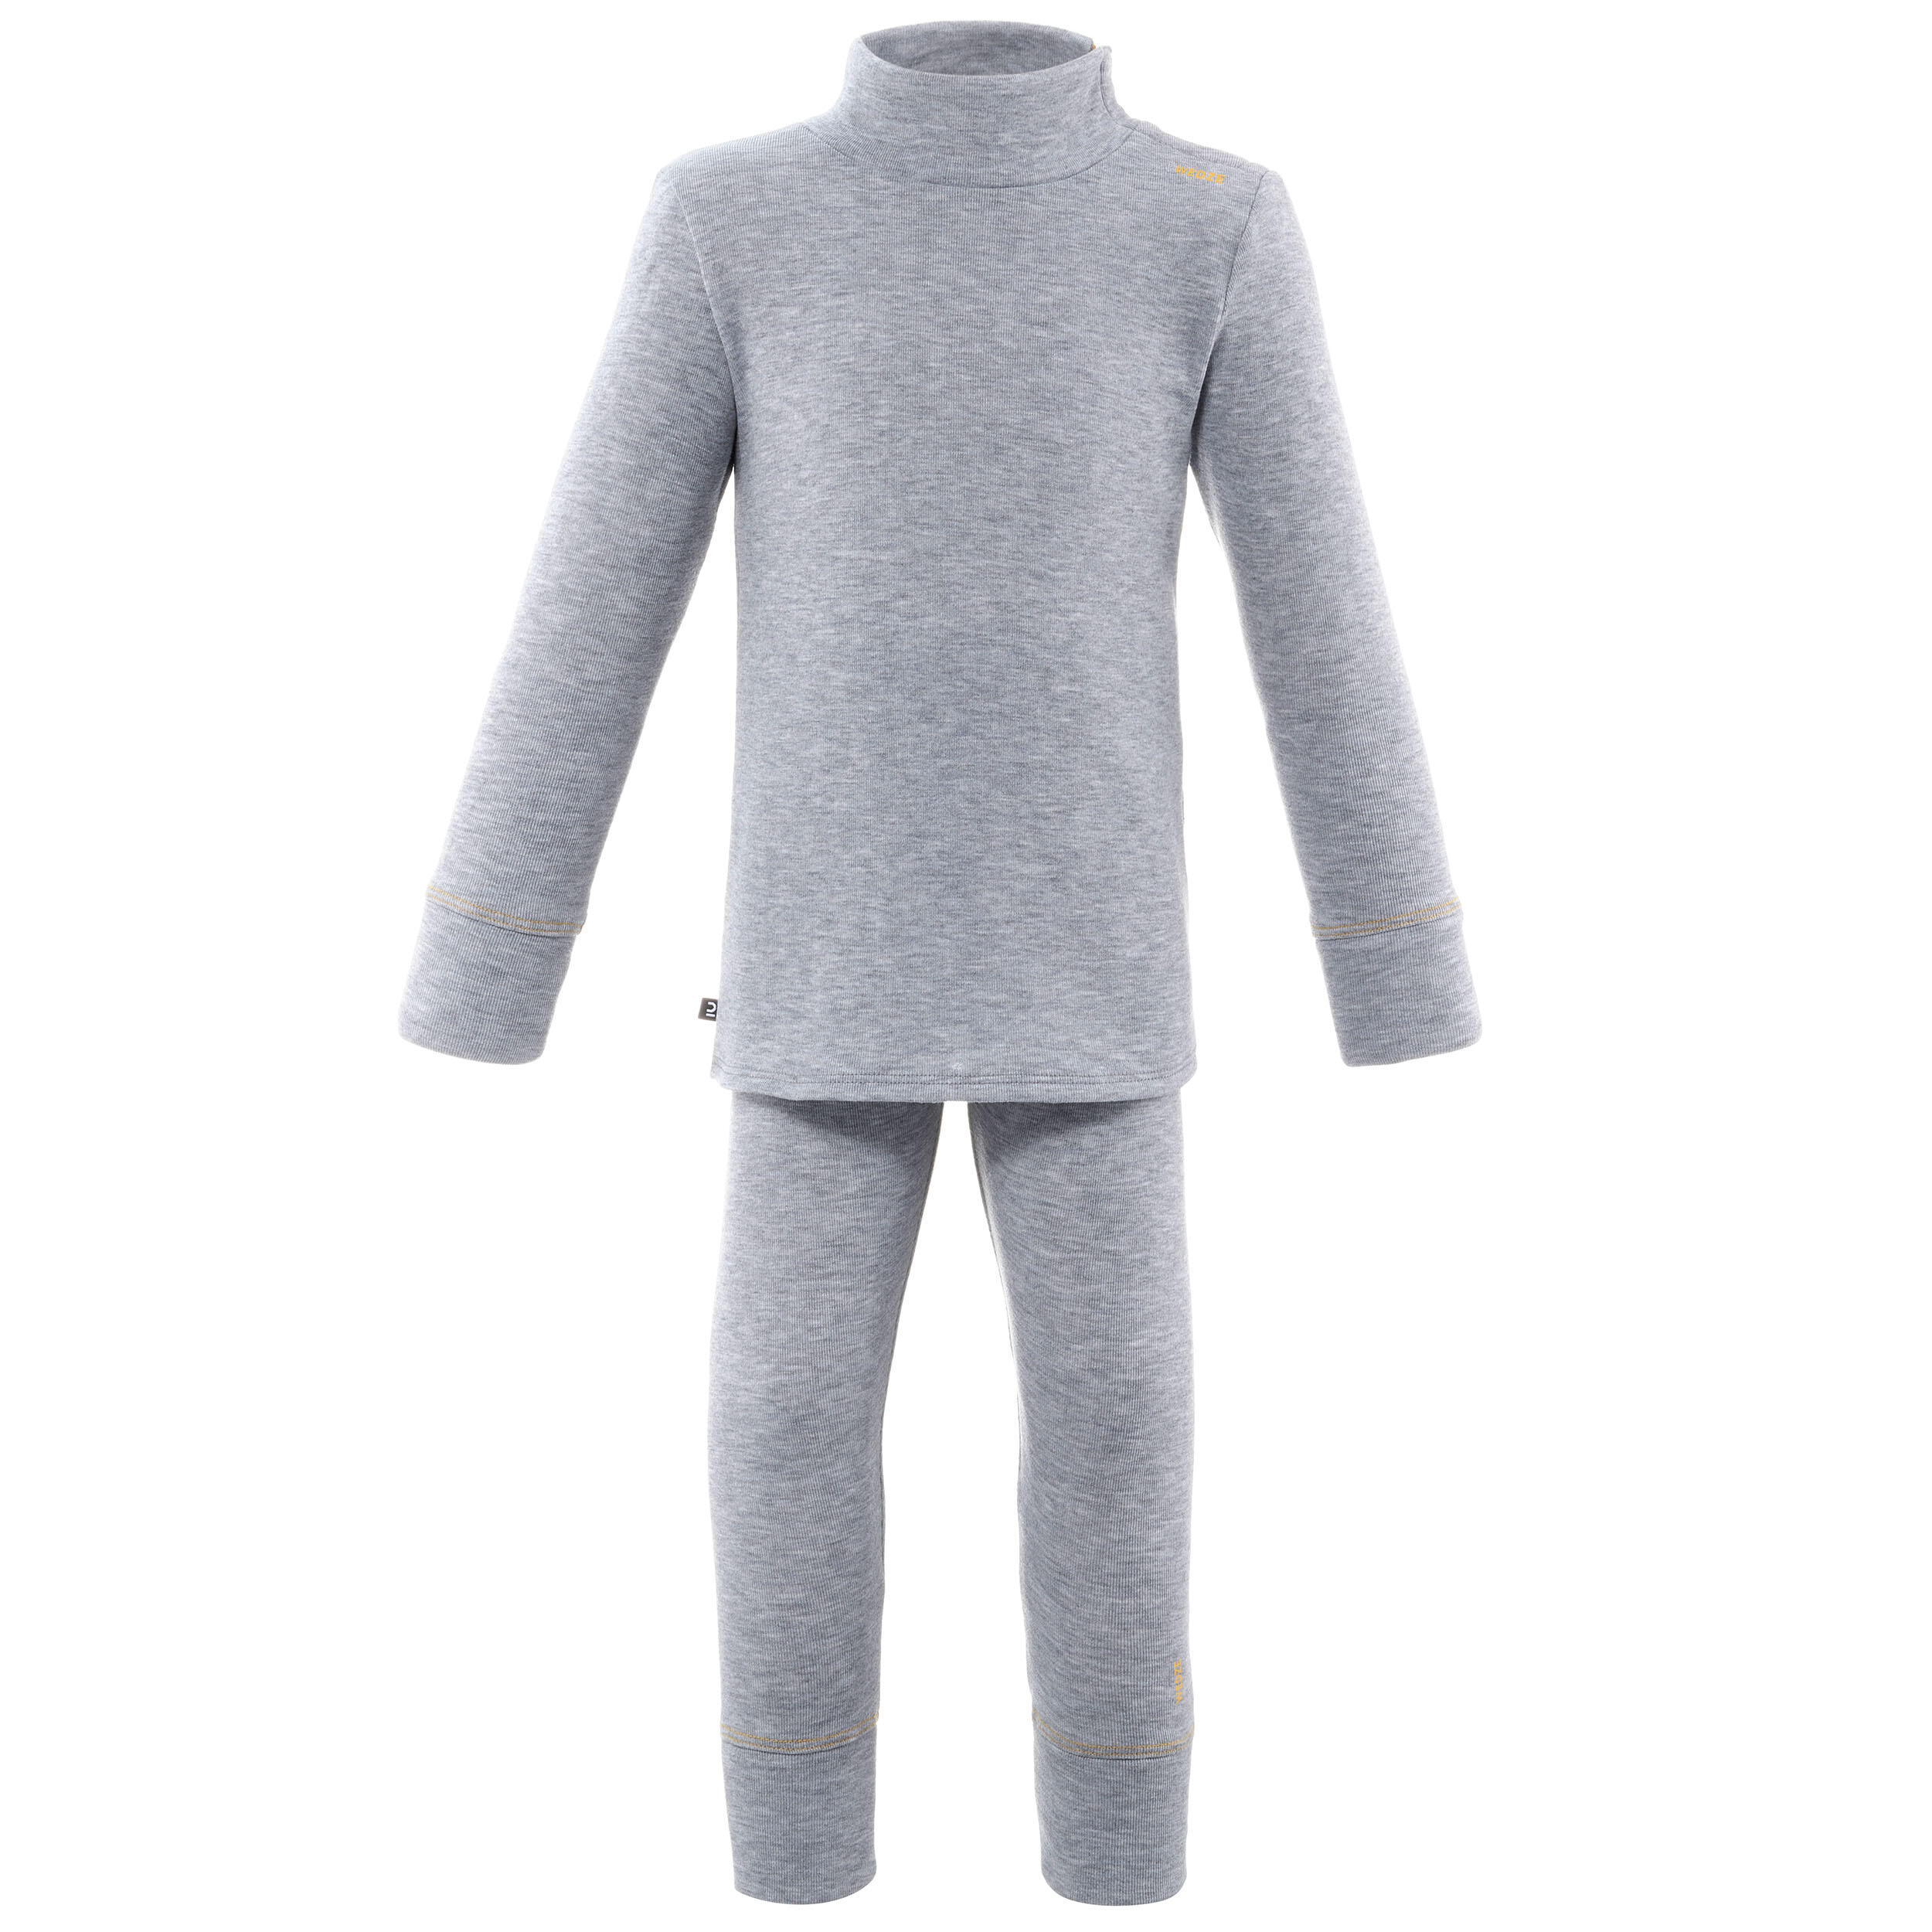 Base layer trousers, Baby ski leggings - WARM grey 9/11